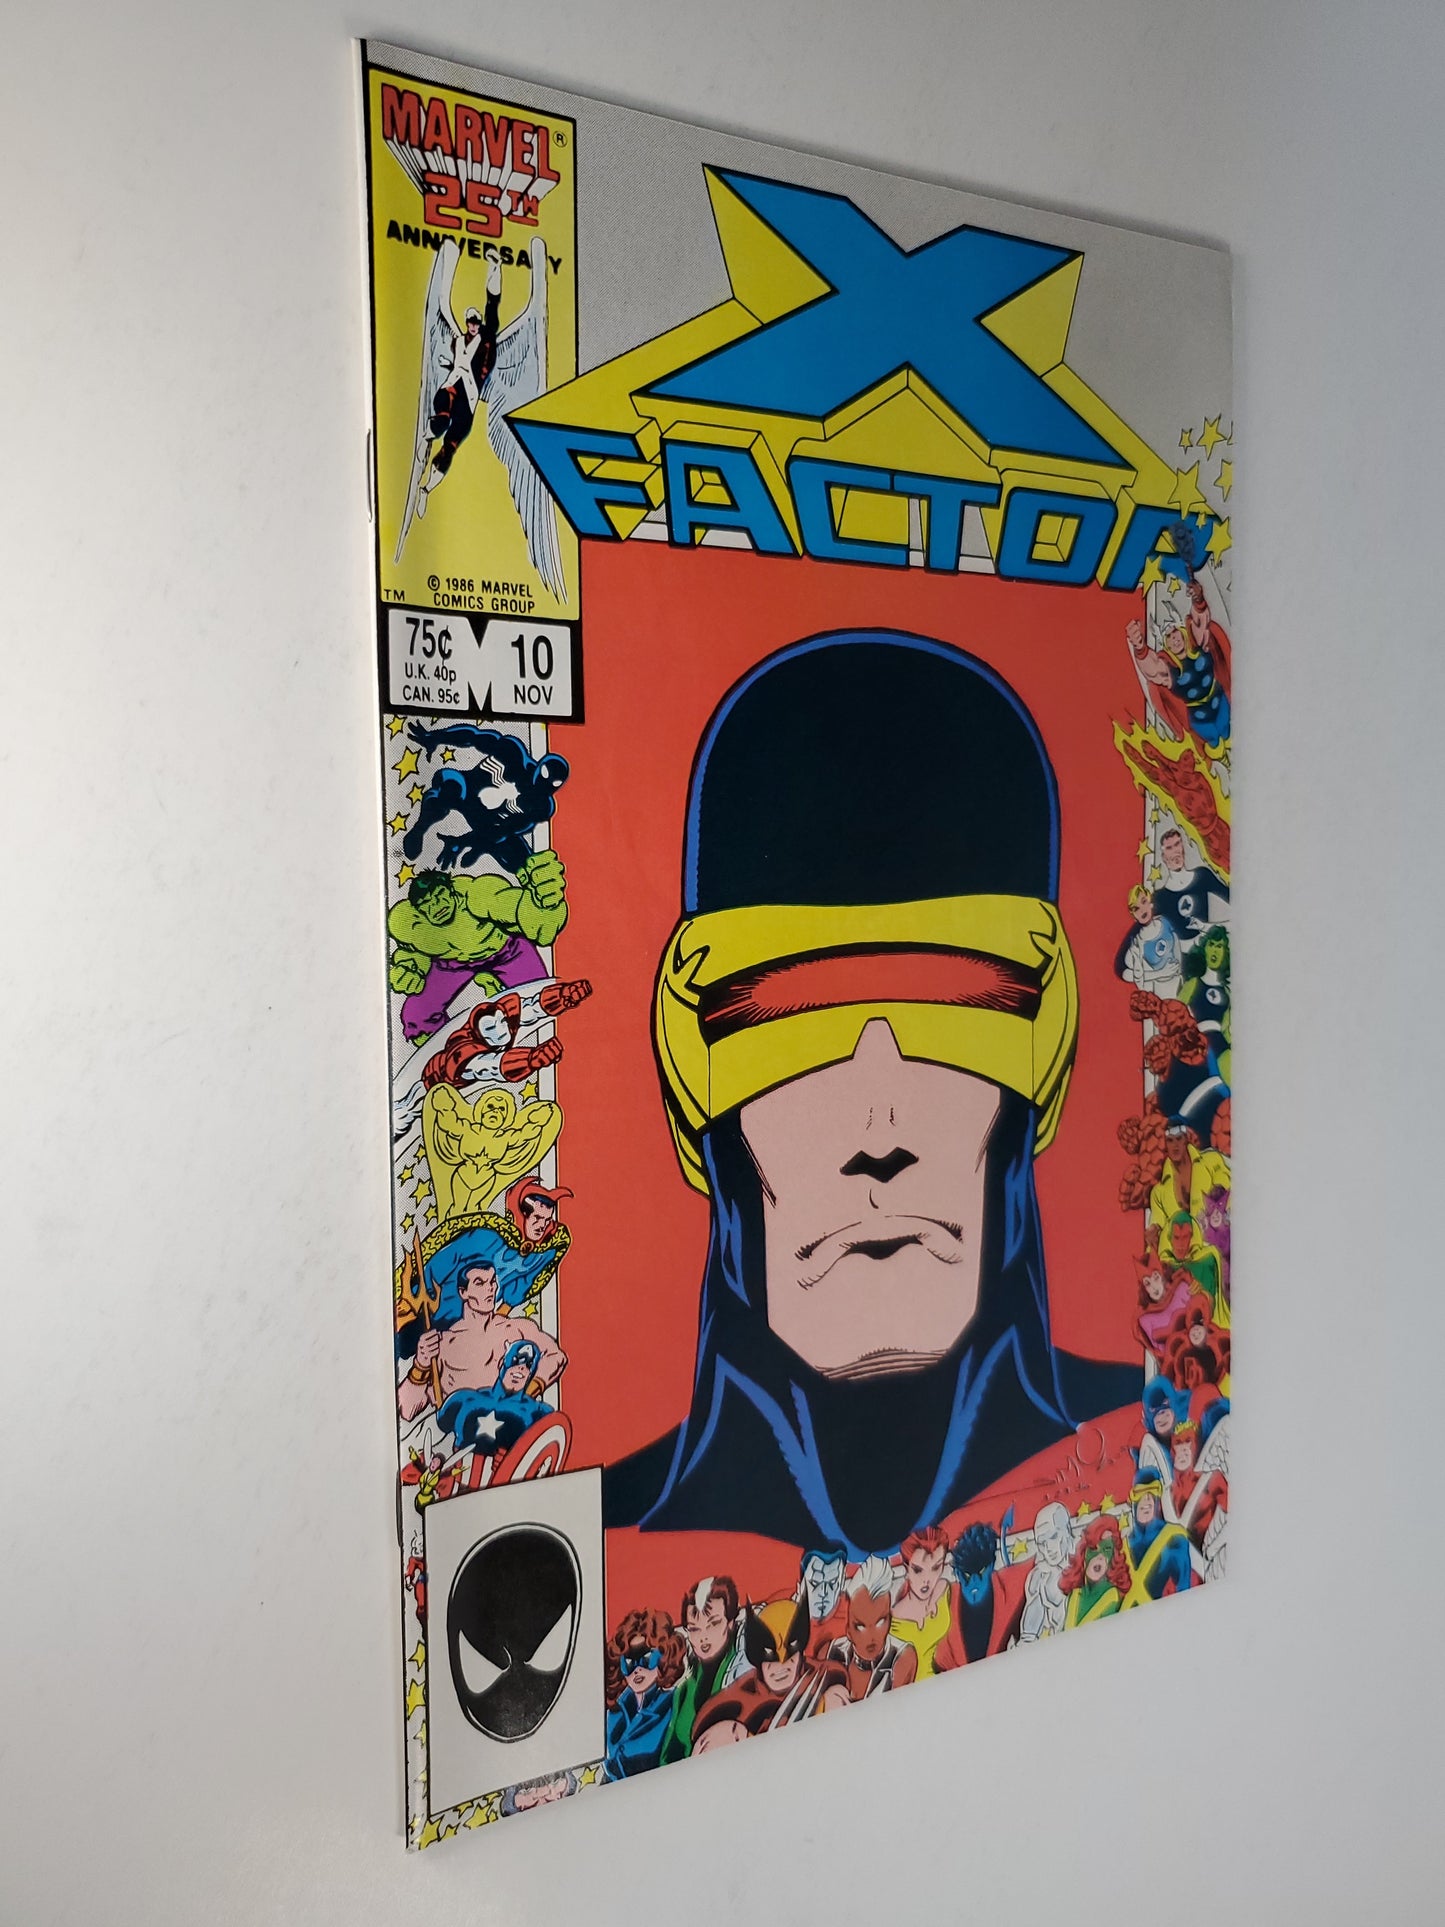 Marvel X-Factor Vol 1 #10 Nov 25th Anniversary (101771) Key